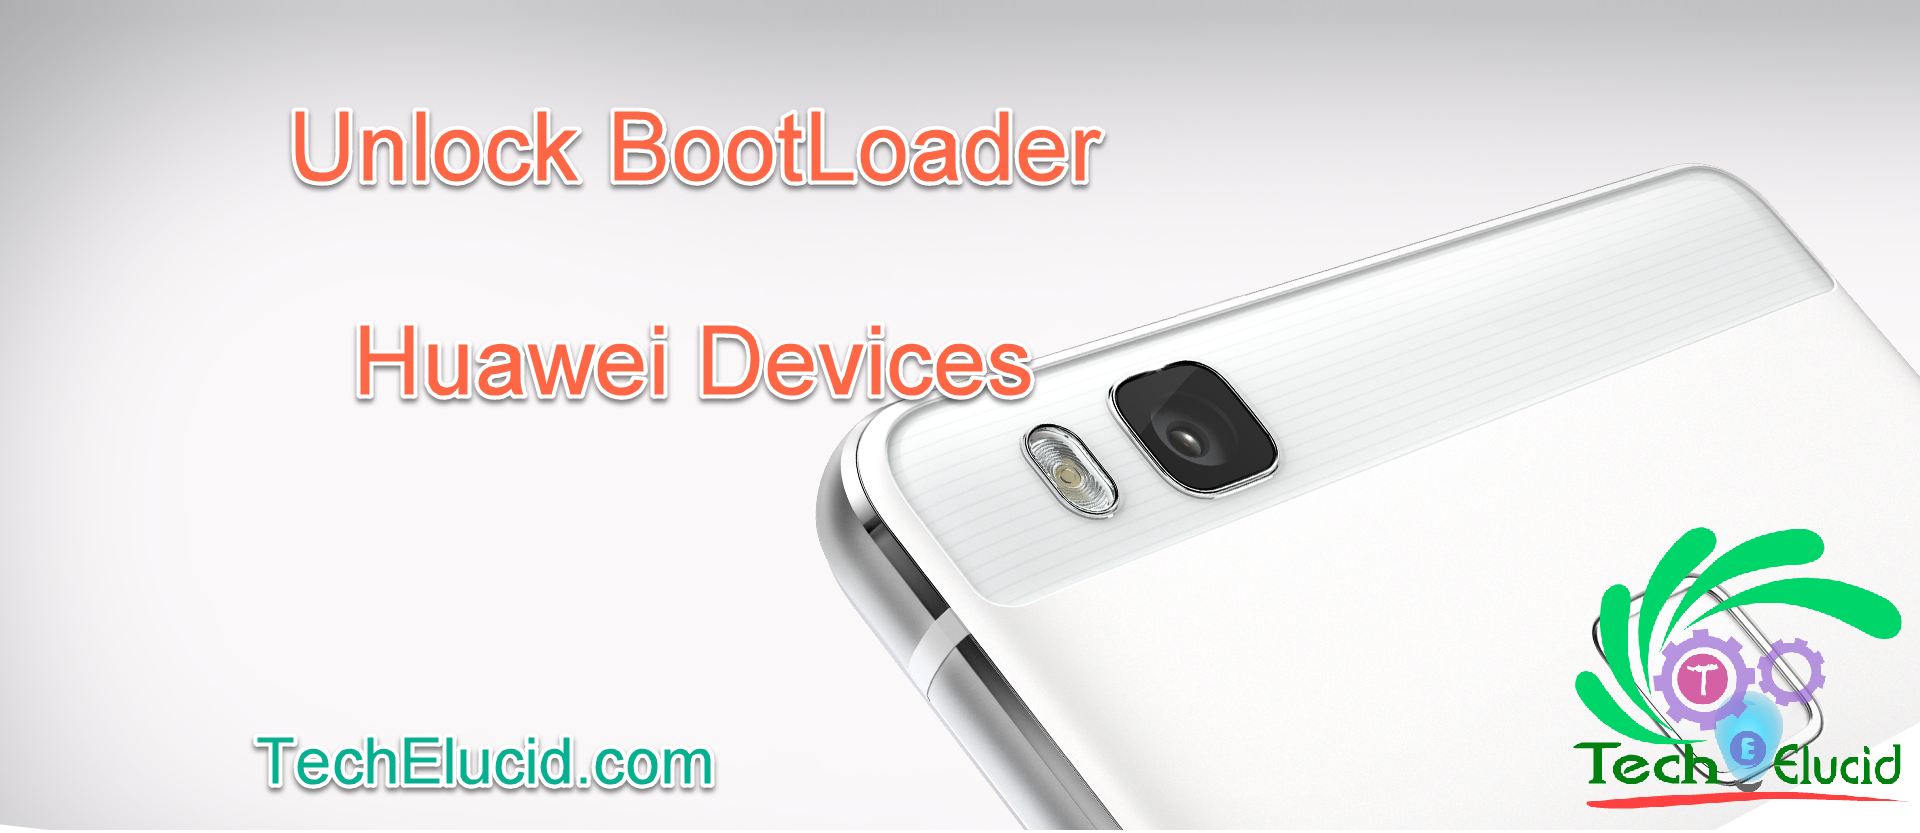 How to Unlock Bootloader on Huawei Phones / Unlock bootloader on Huawei devices